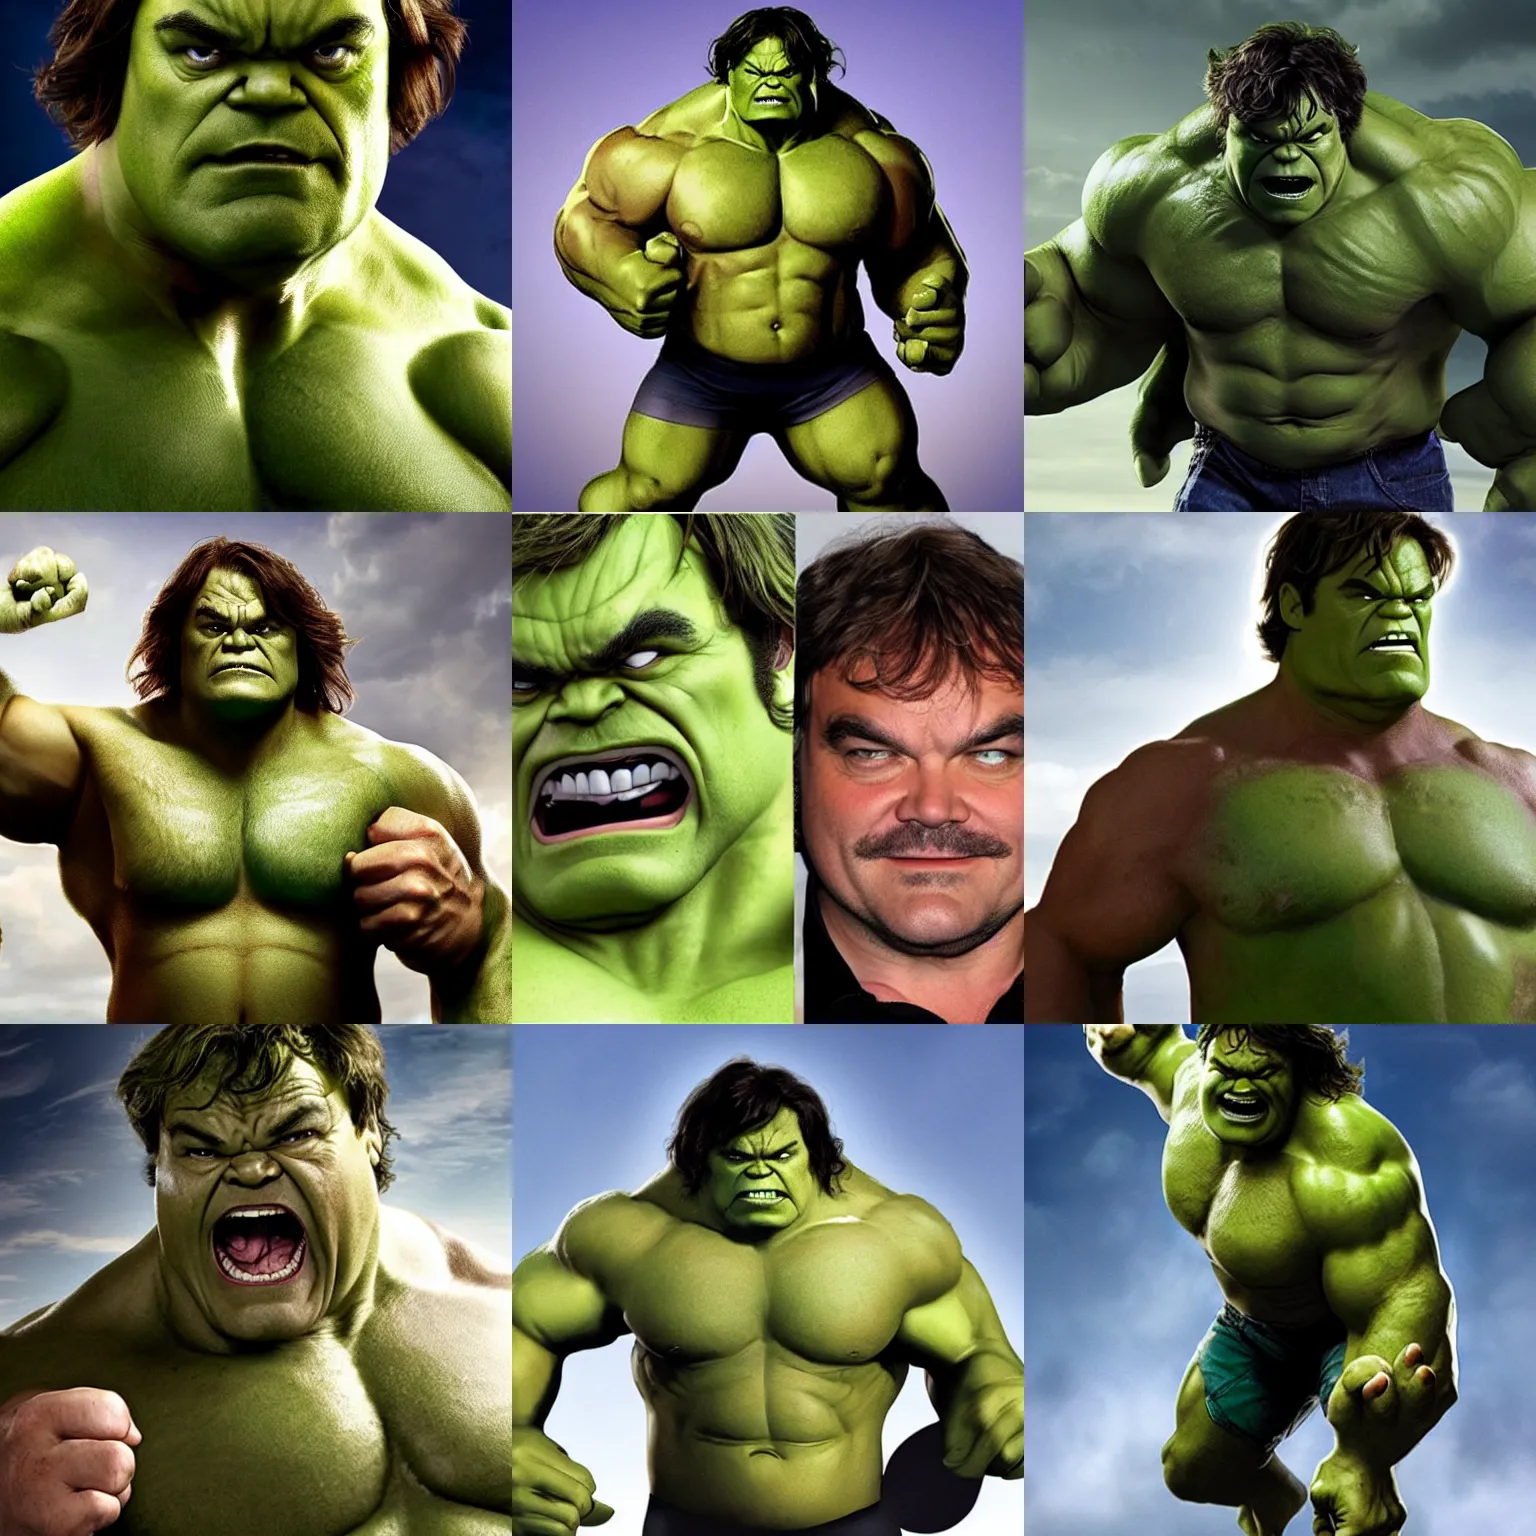 Prompt: Jack Black as the Hulk